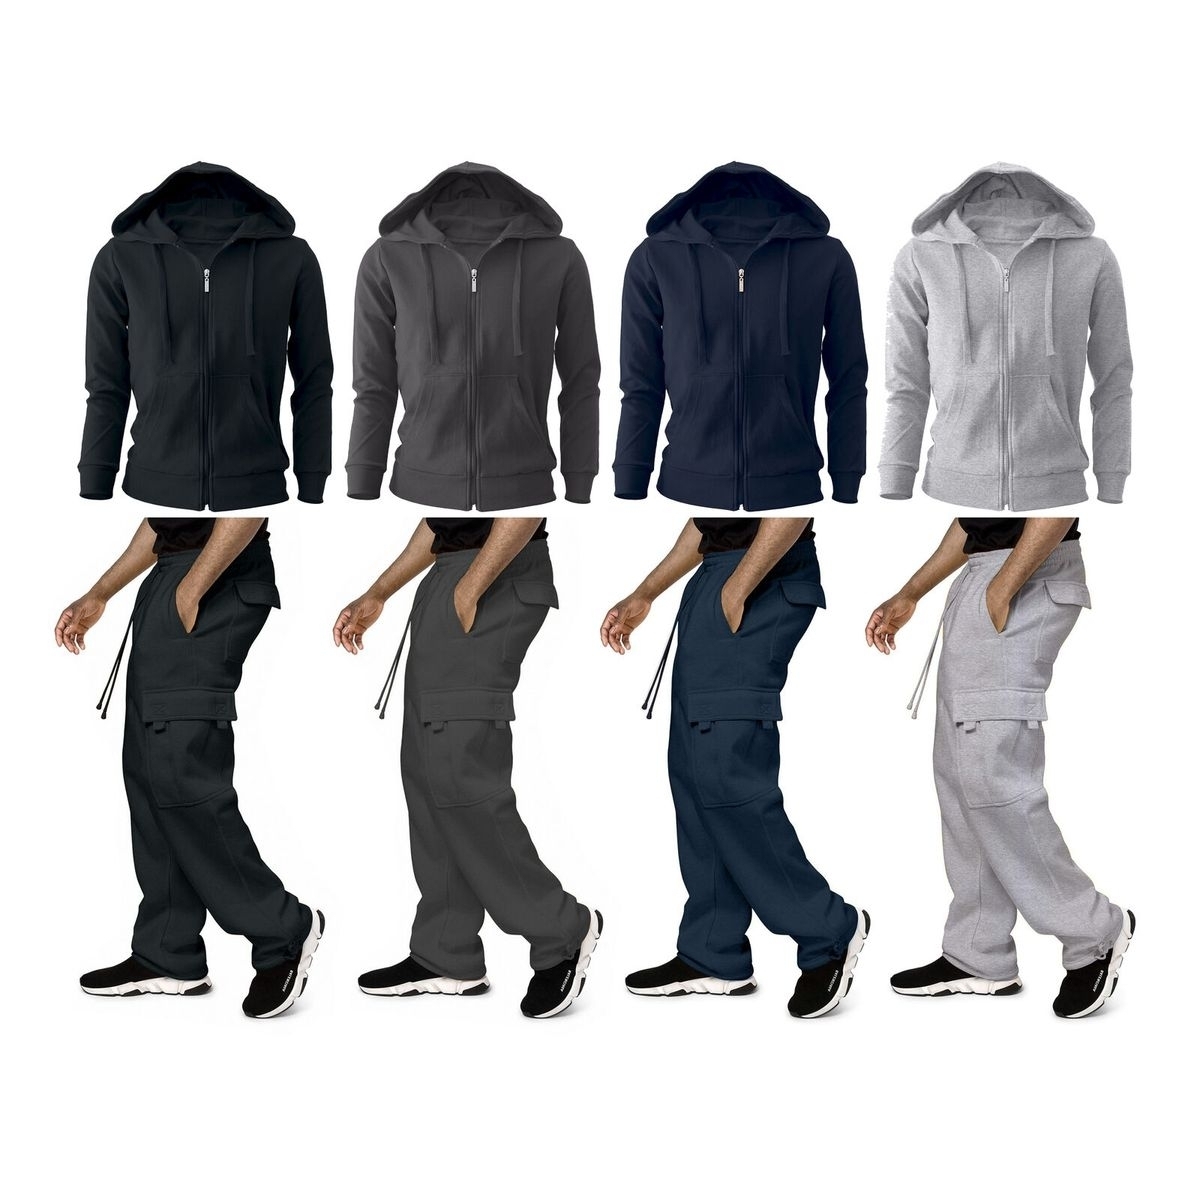 Men's Big & Tall Winter Warm Athletic Active Cozy Fleece Lined Multi-Pocket Full Zip Up Cargo Tracksuit - Grey, 3xl